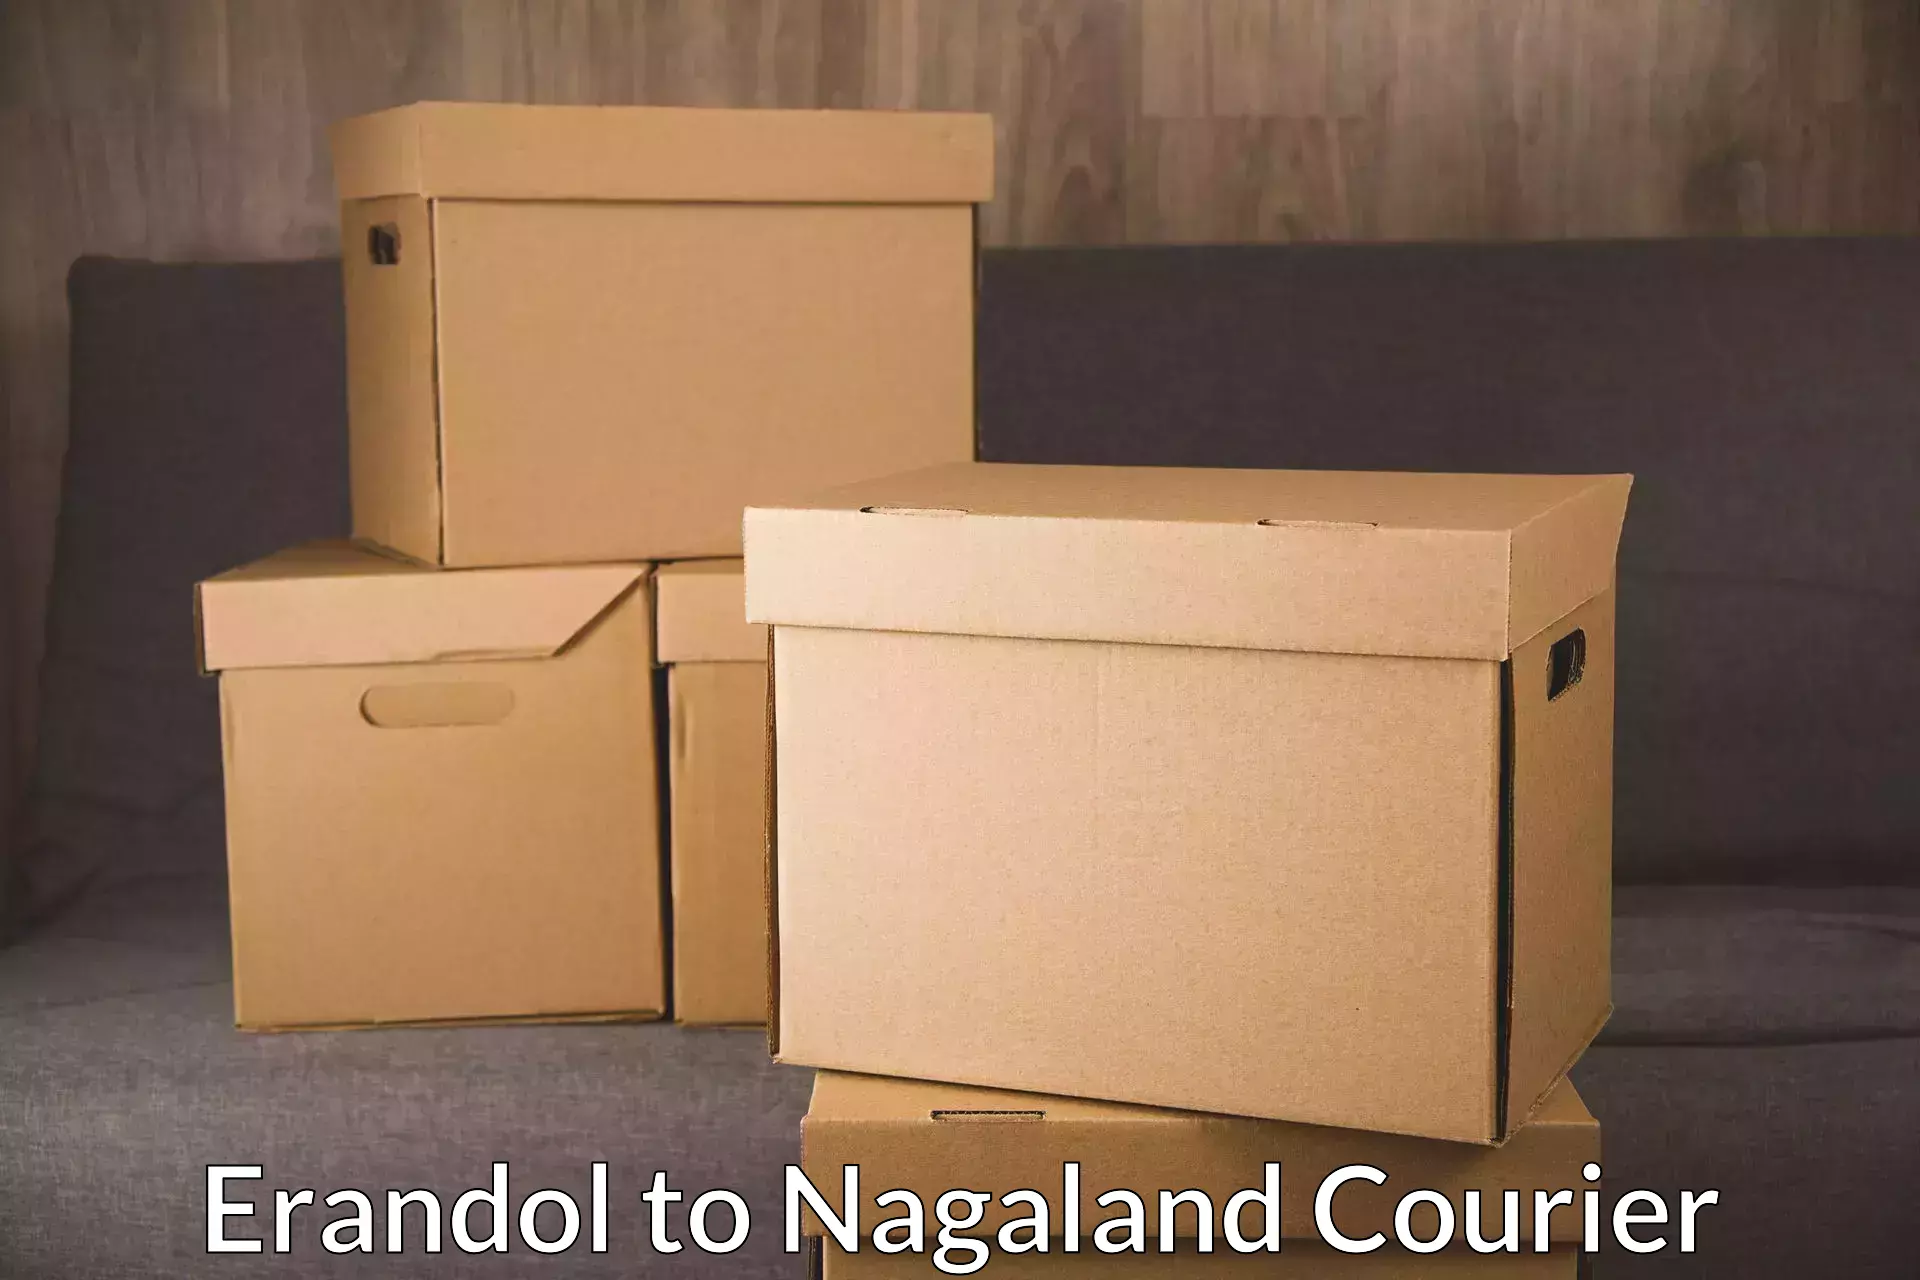 Affordable parcel service Erandol to Mon